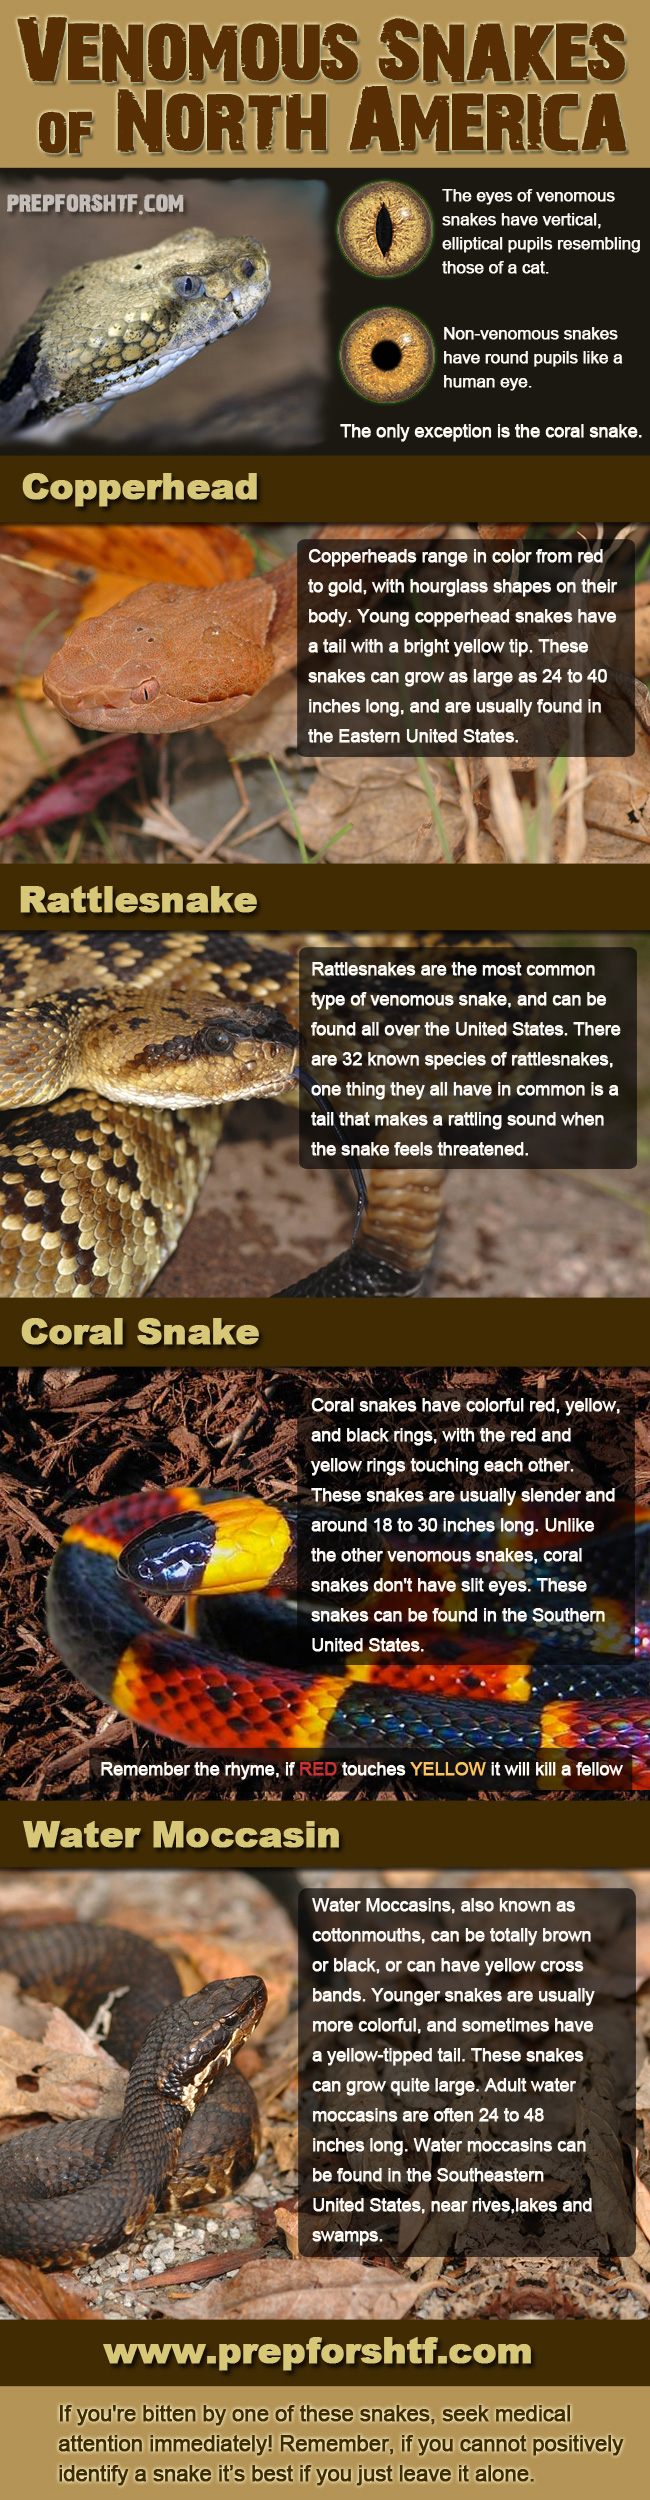 United States Venomous Snakes Infographic